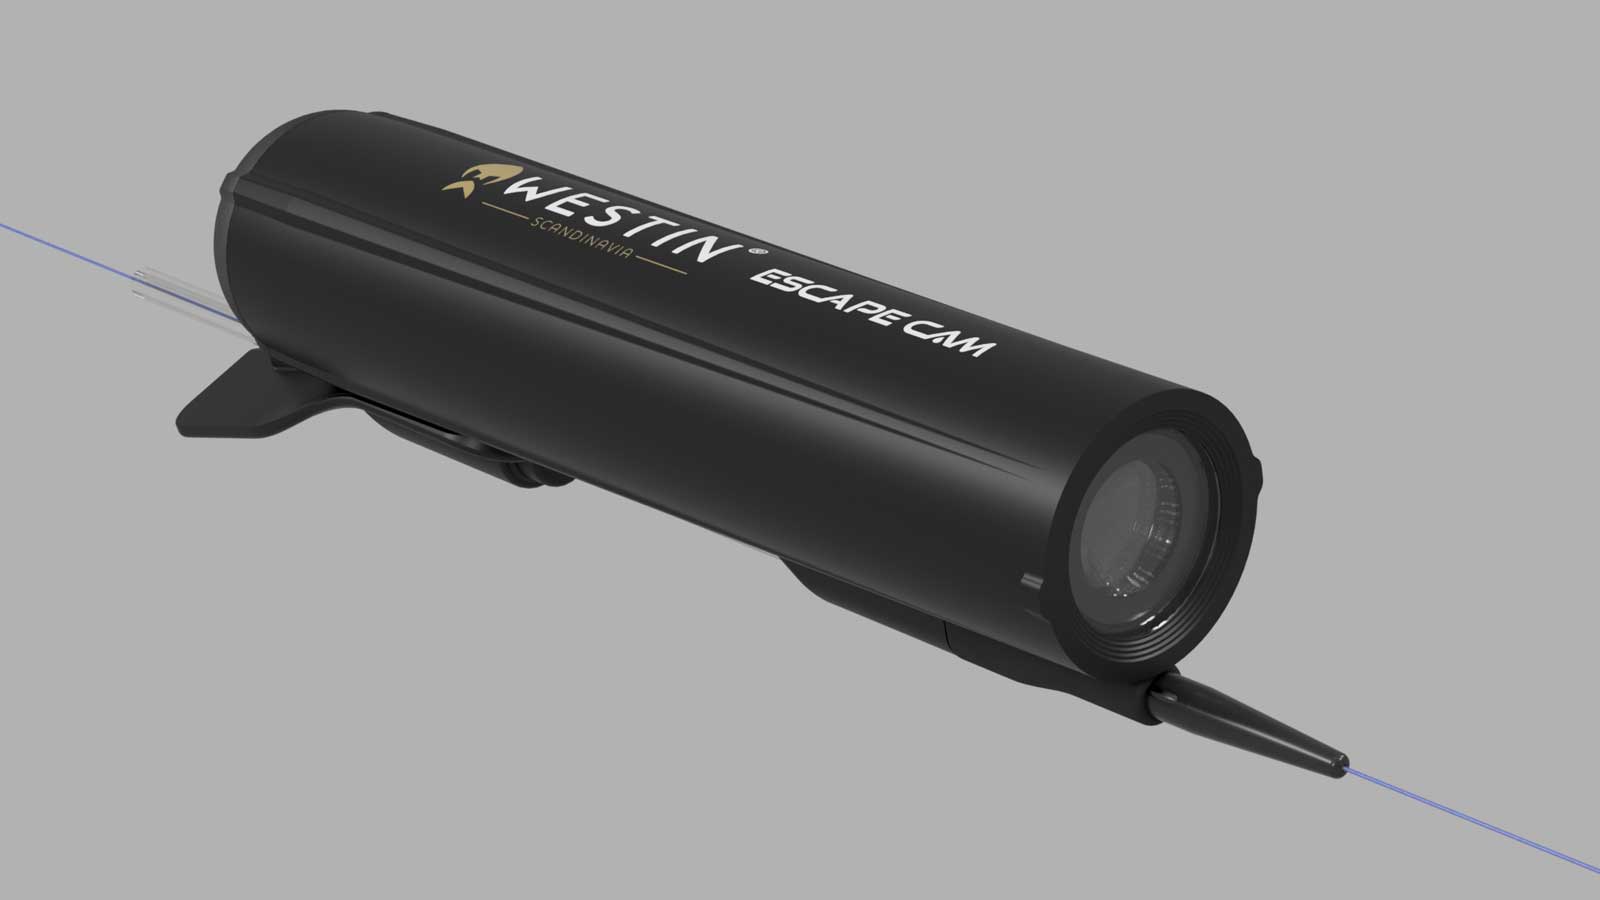 ENGEL USB Rechargeable Lithium-Ion XL Live Bait Aerator Pump